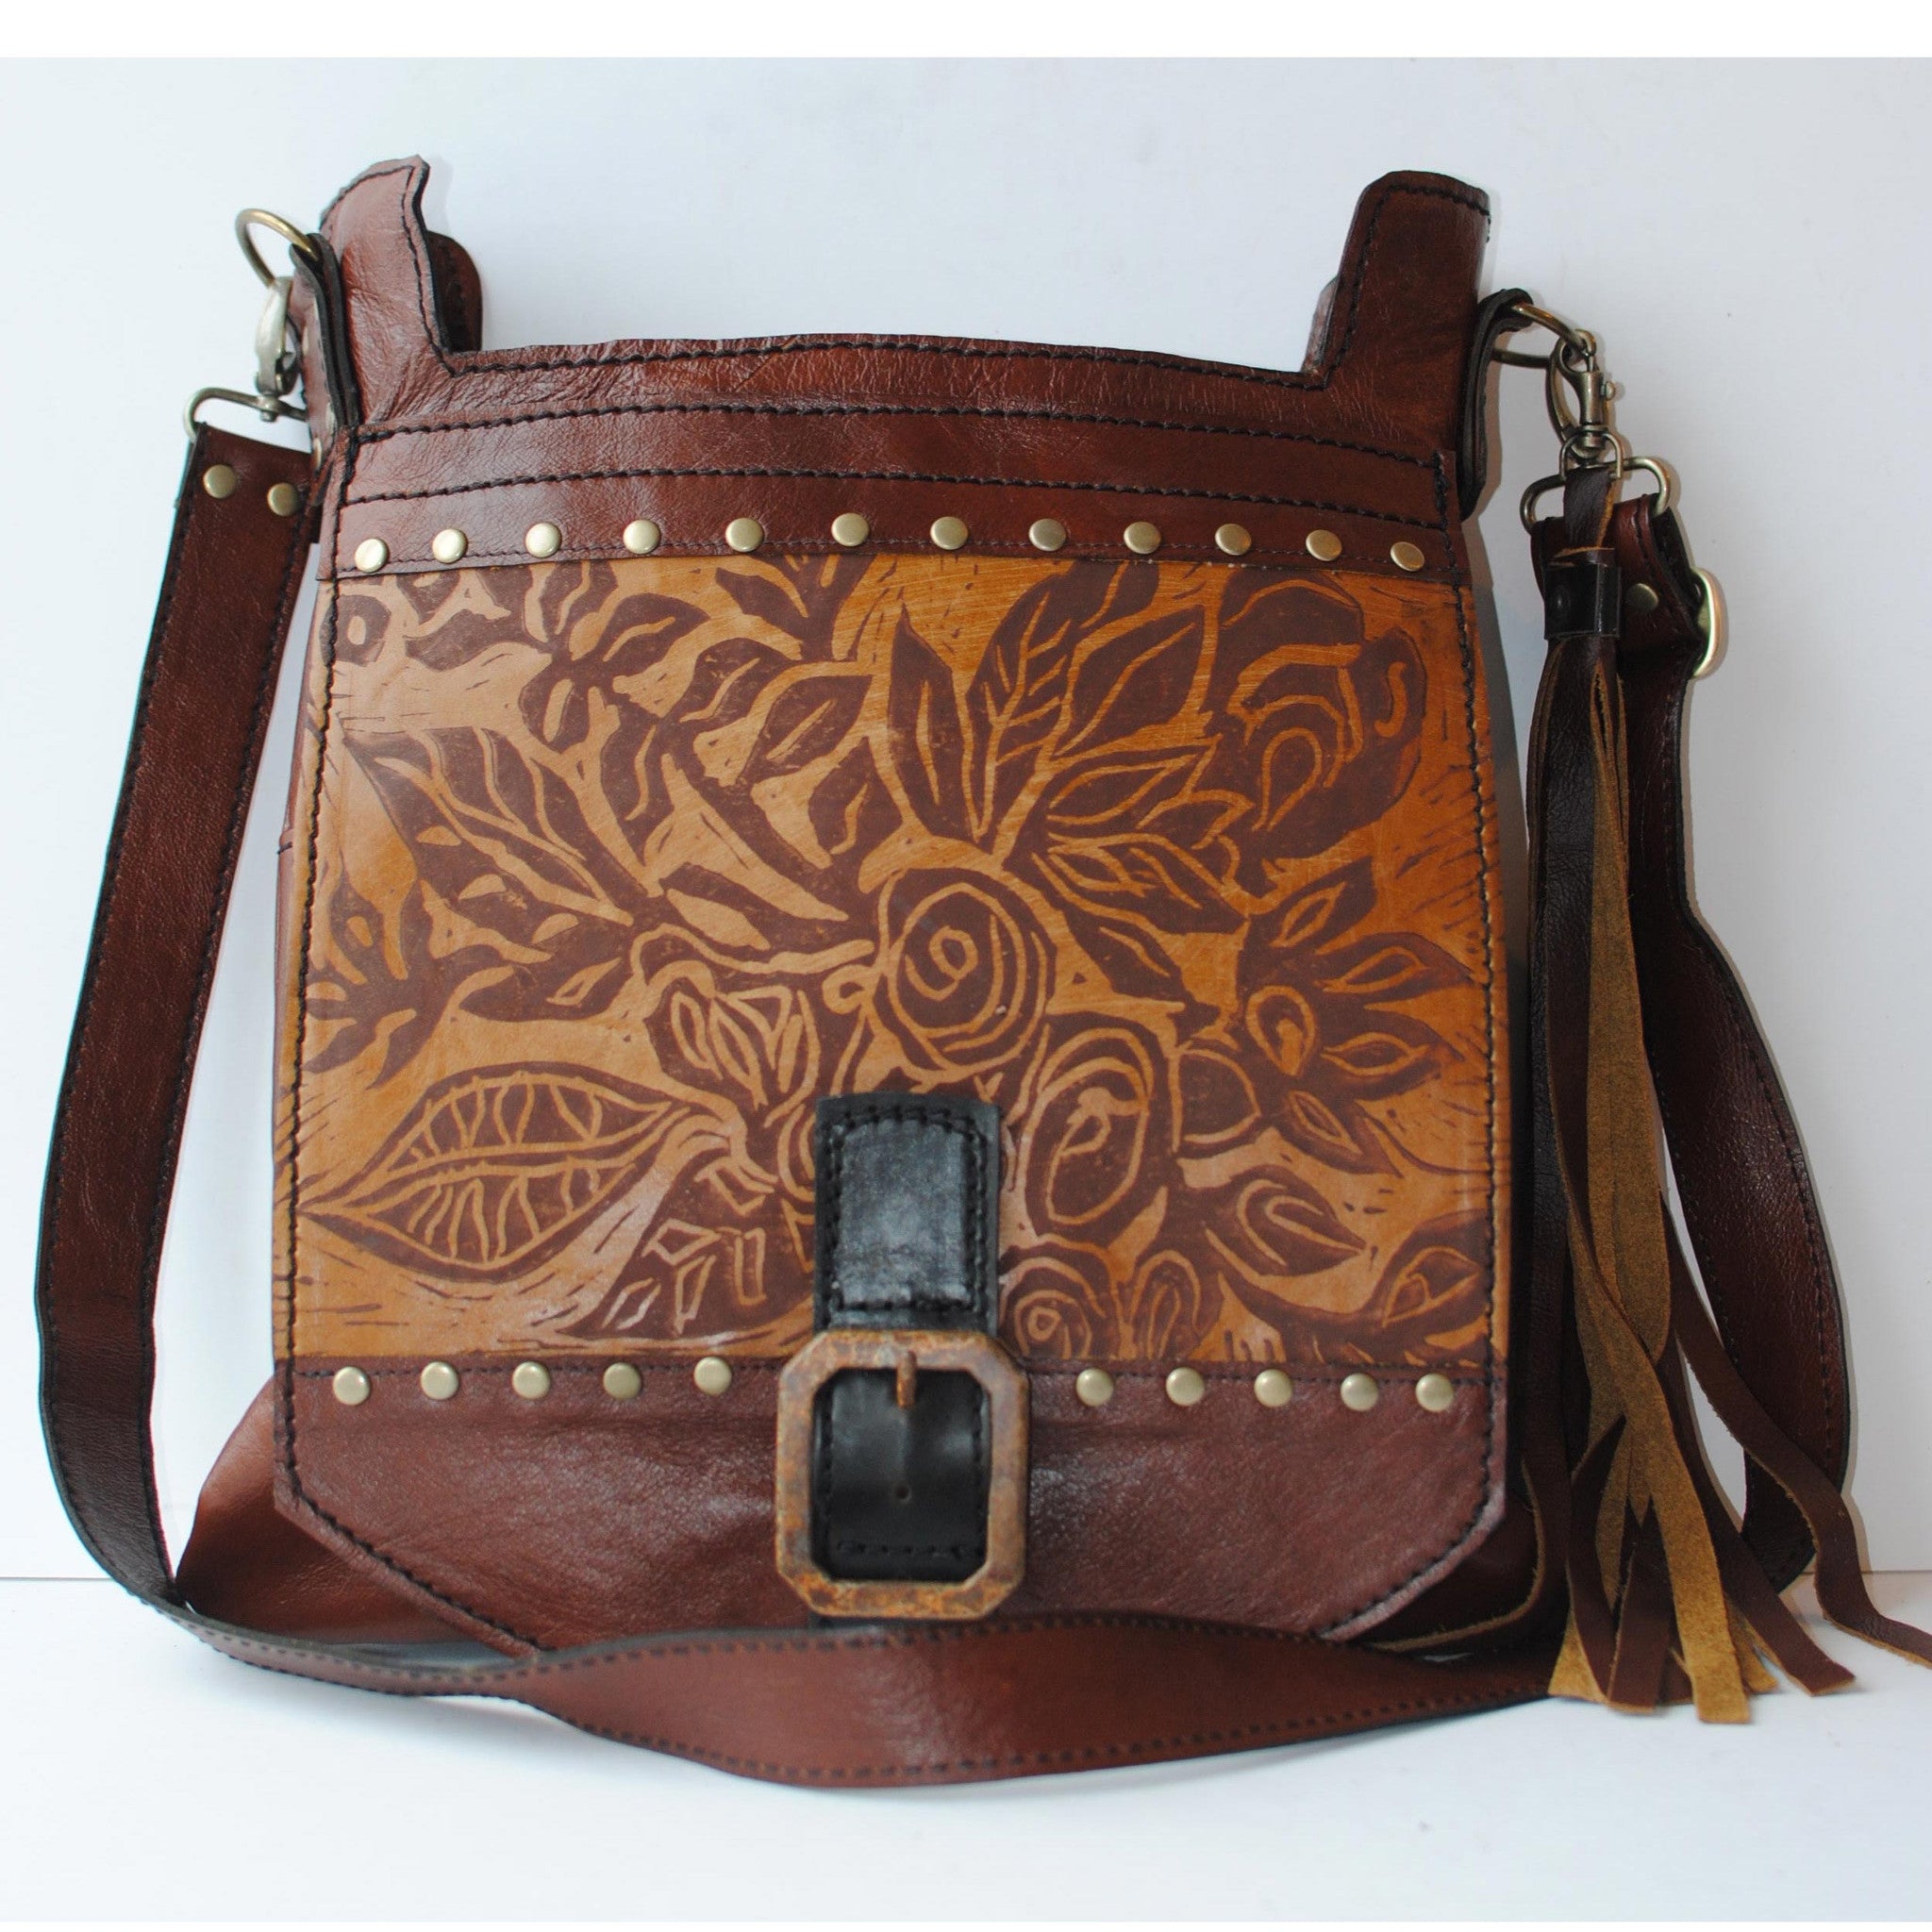 Urban Gypsy Design Urban Satchel Handbag in English Print and Tennesee Whiskey Color, Artistic Artisan Designed Handbags